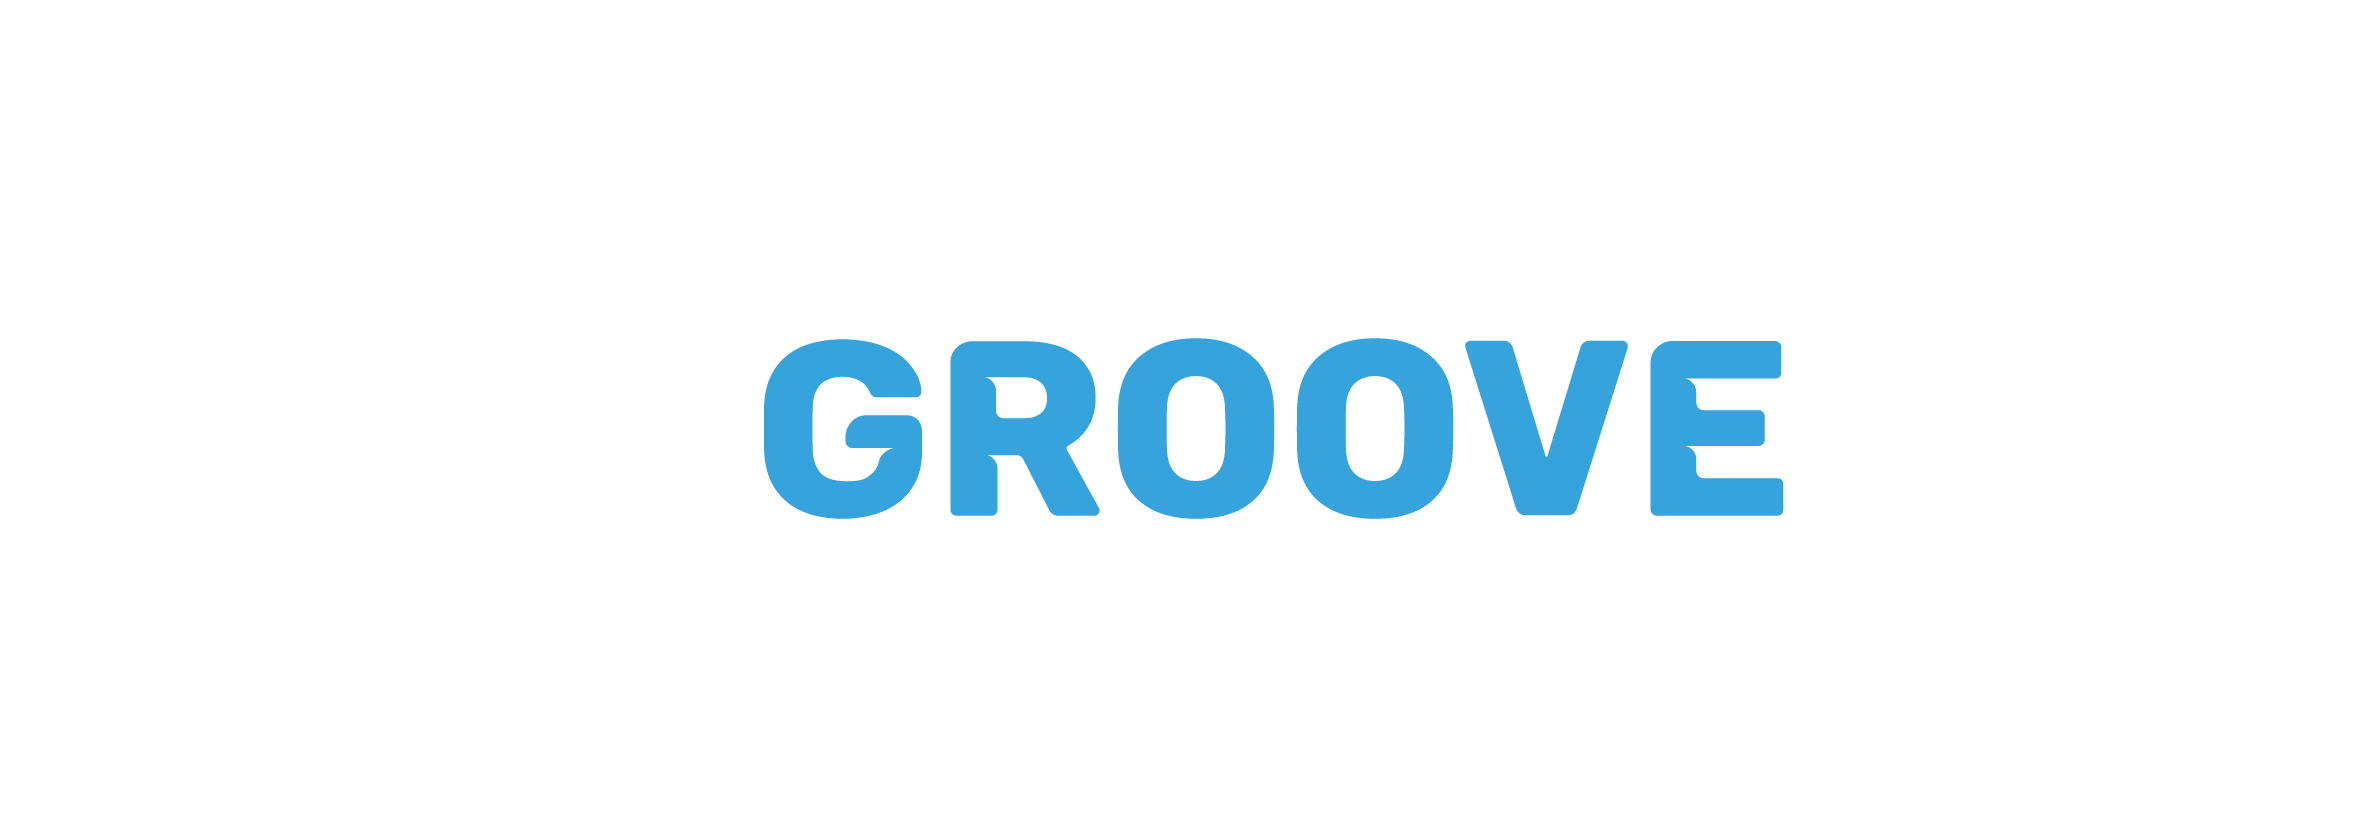 Groovebox logo